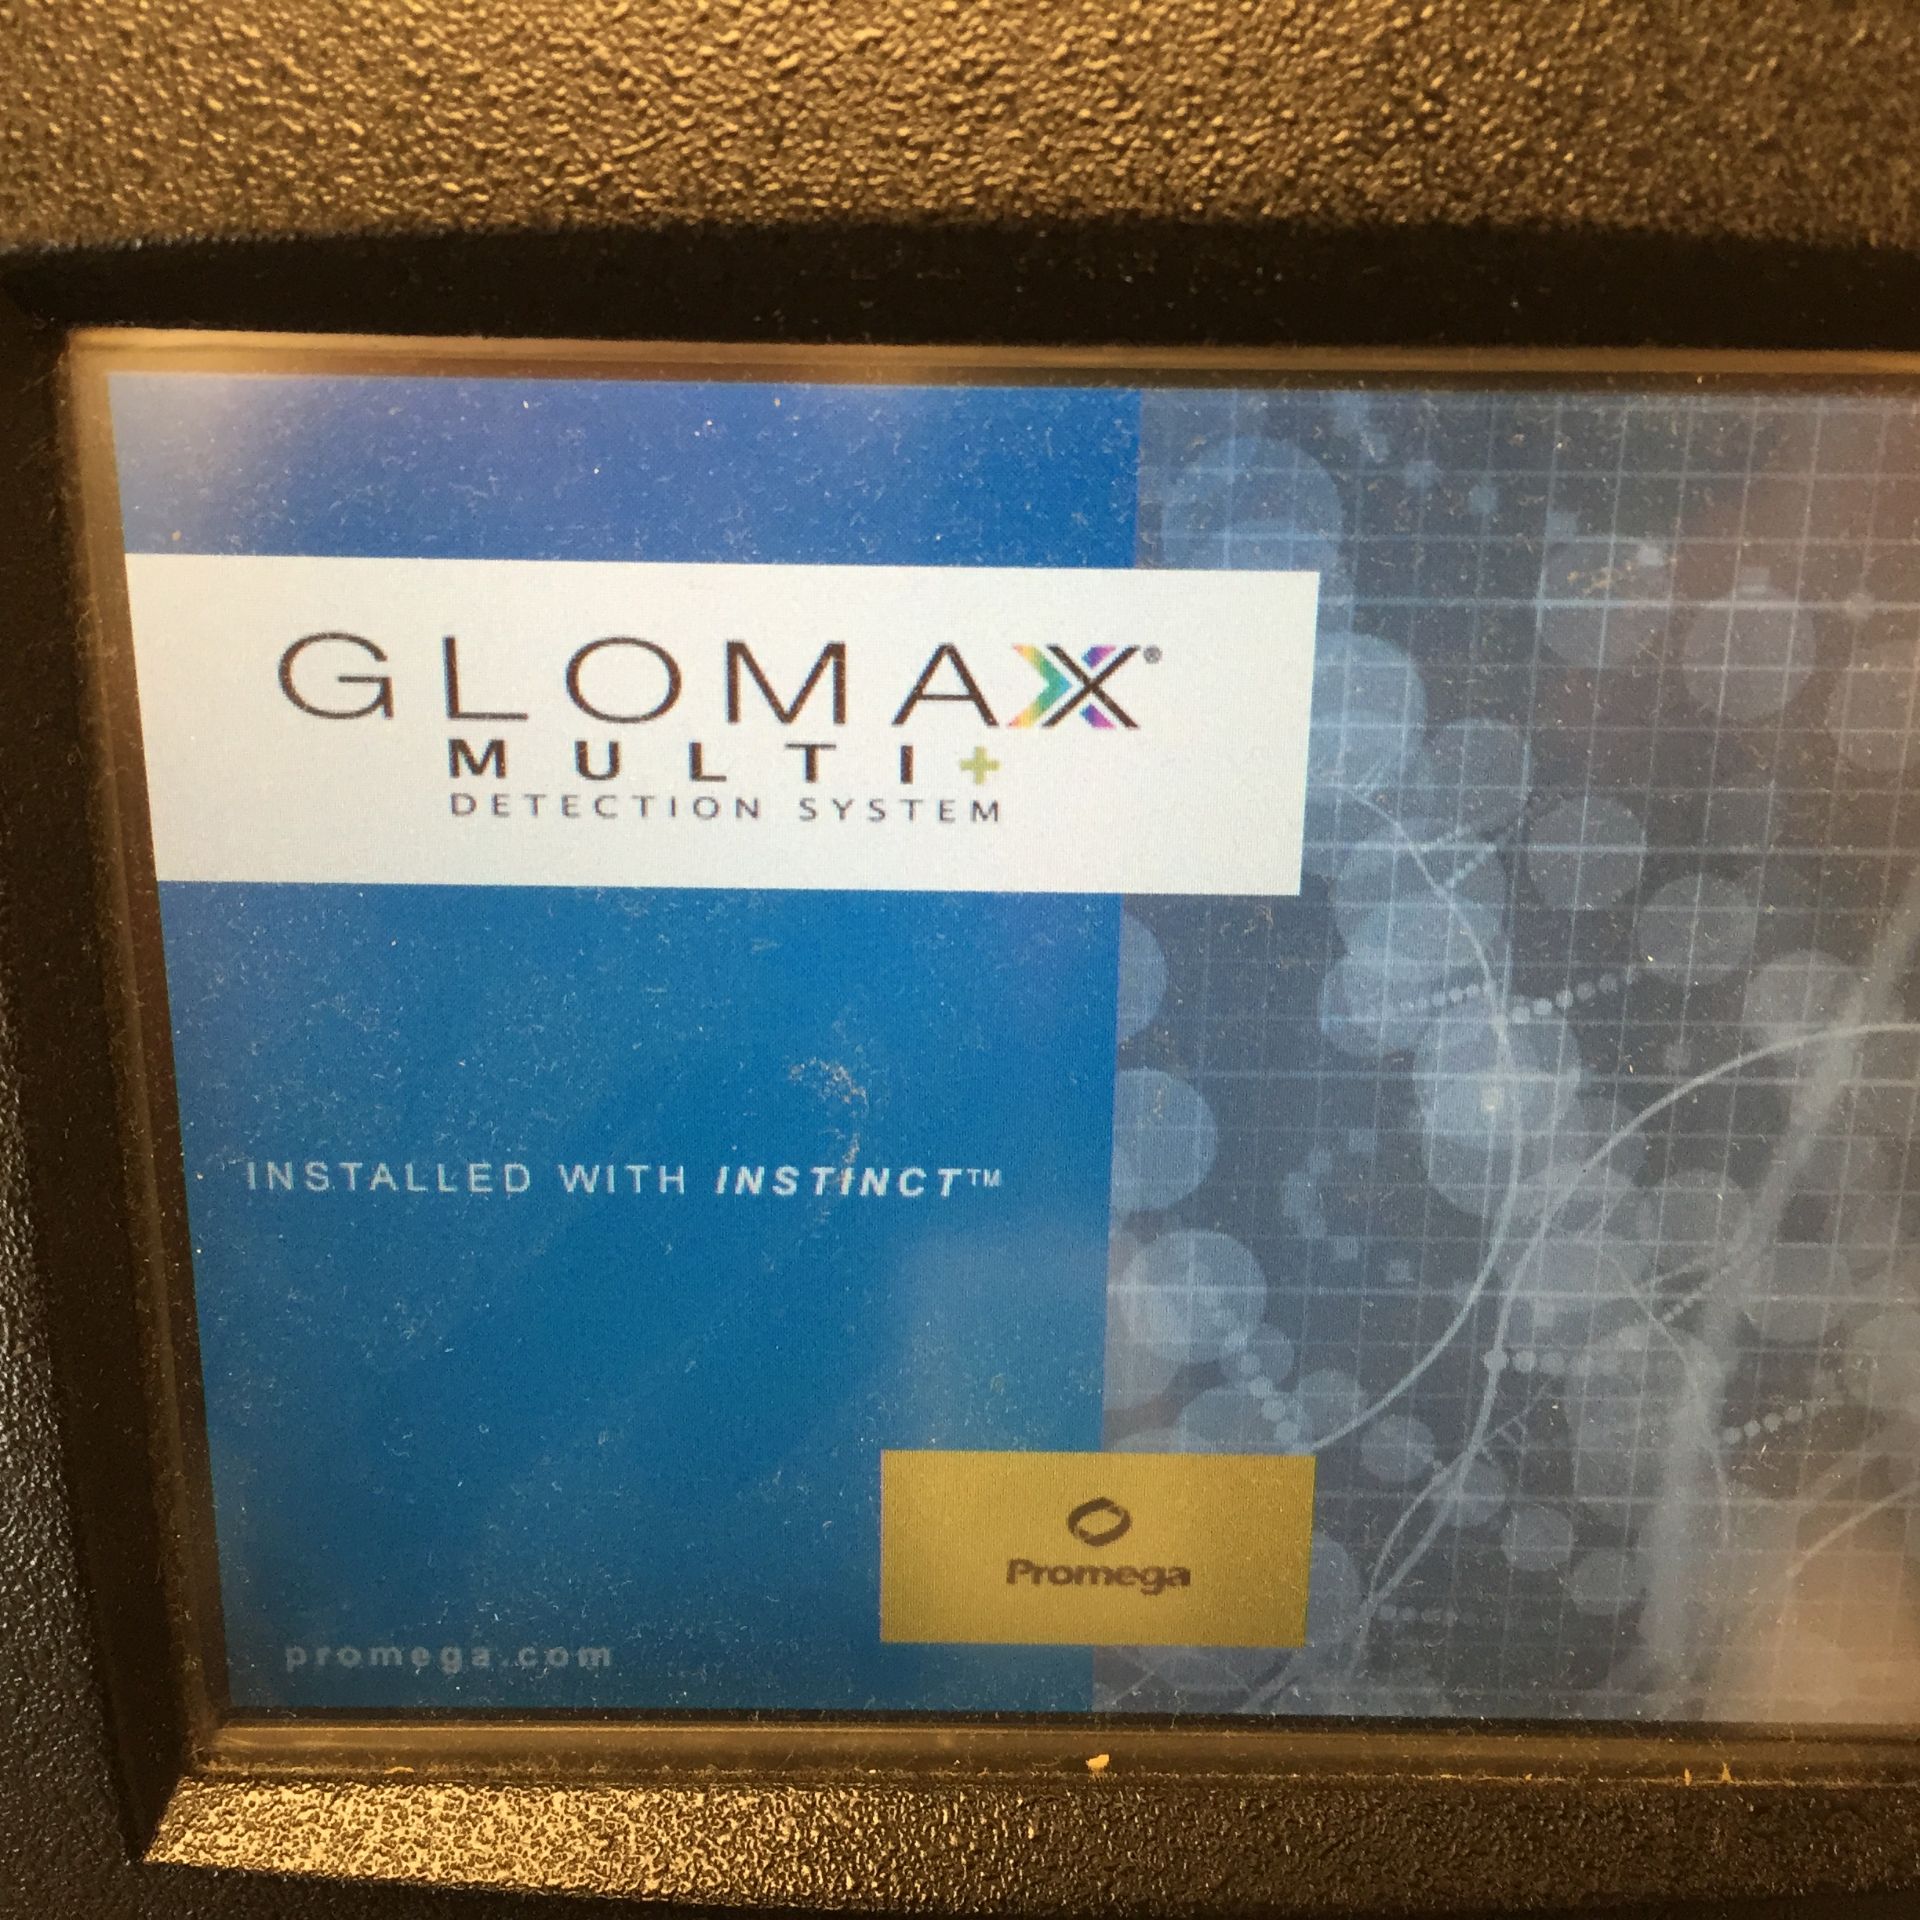 Promega Glomax Multi+ Detection System - Image 2 of 4